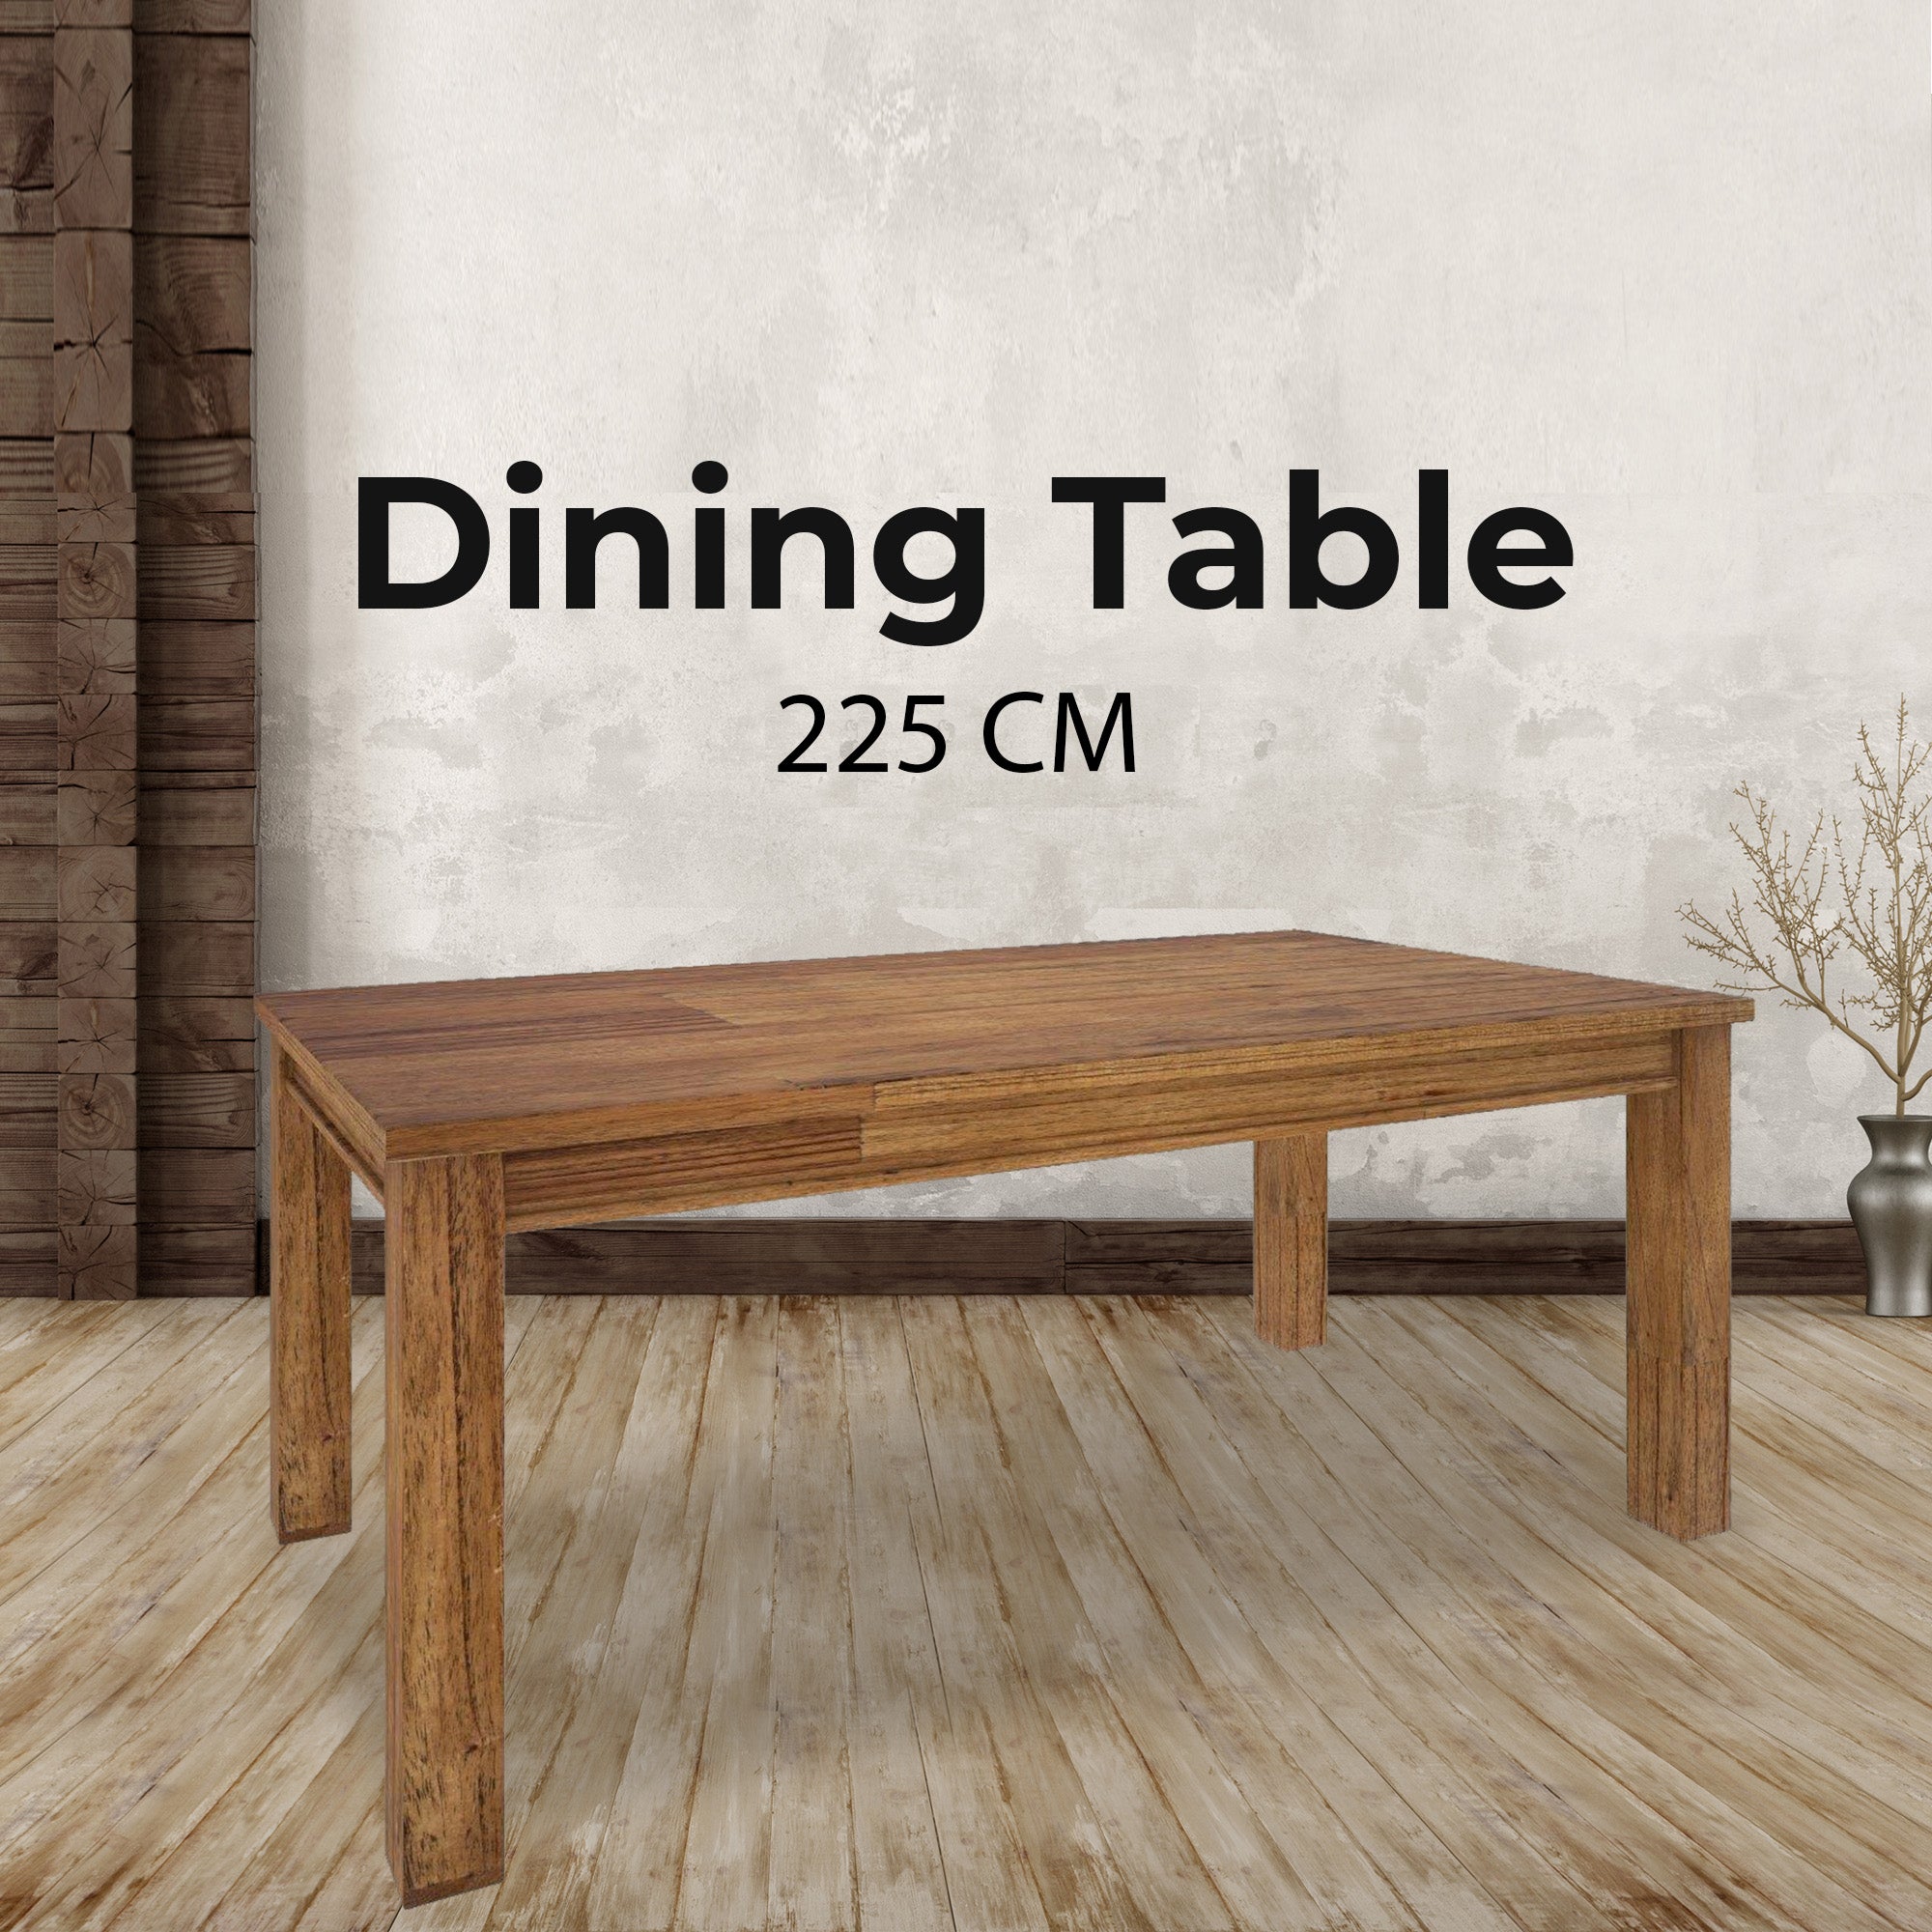 Birdsville Dining Table 225cm Solid Mt Ash Wood Home Dinner Furniture - Brown